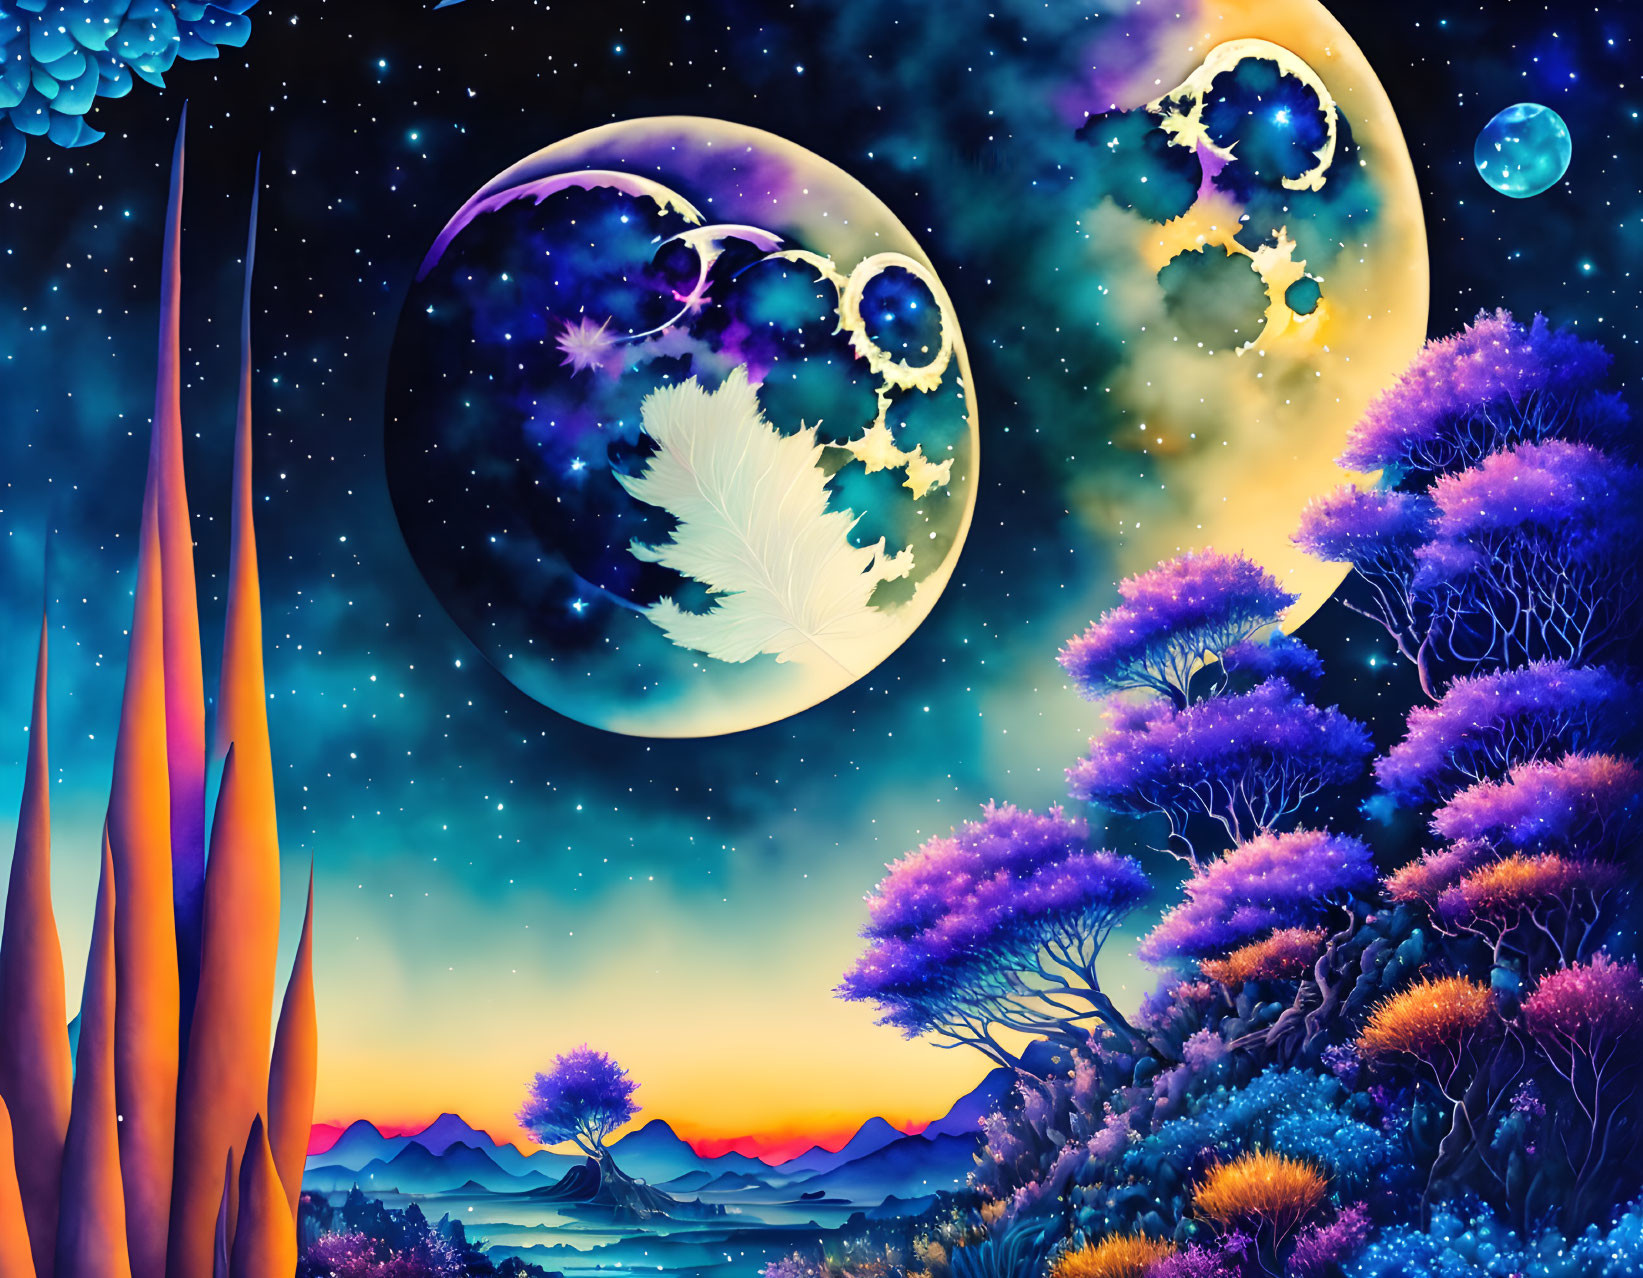 Colorful fantasy landscape with purple foliage, orange rocks, and multiple moons